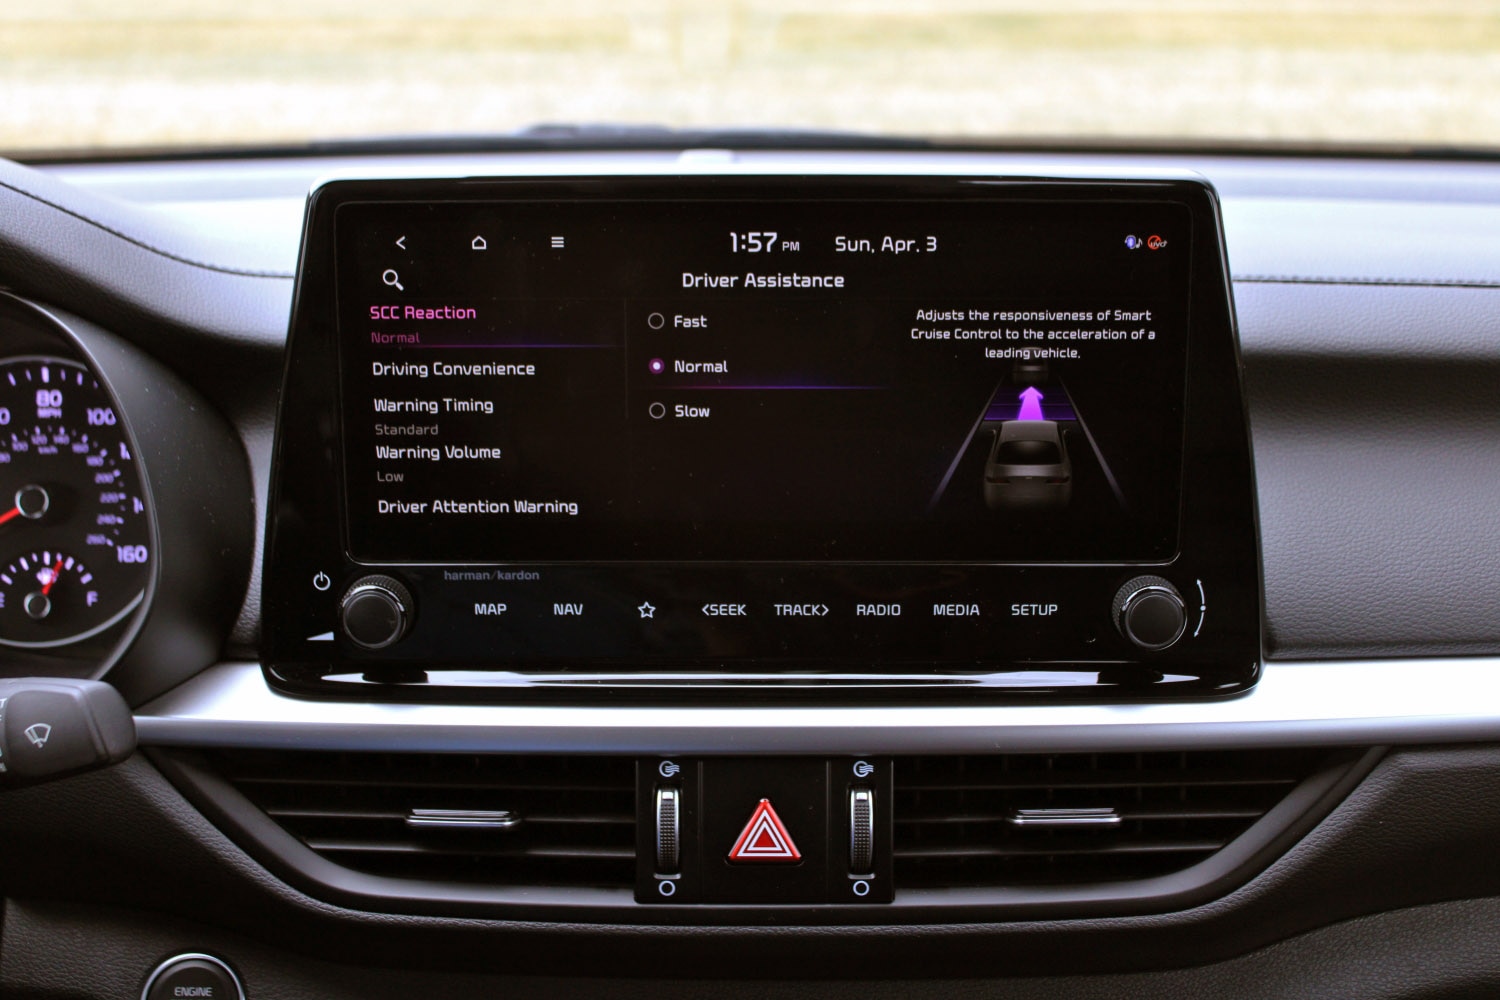 2022 Kia Forte infotainment screen, driver-assistance systems menu